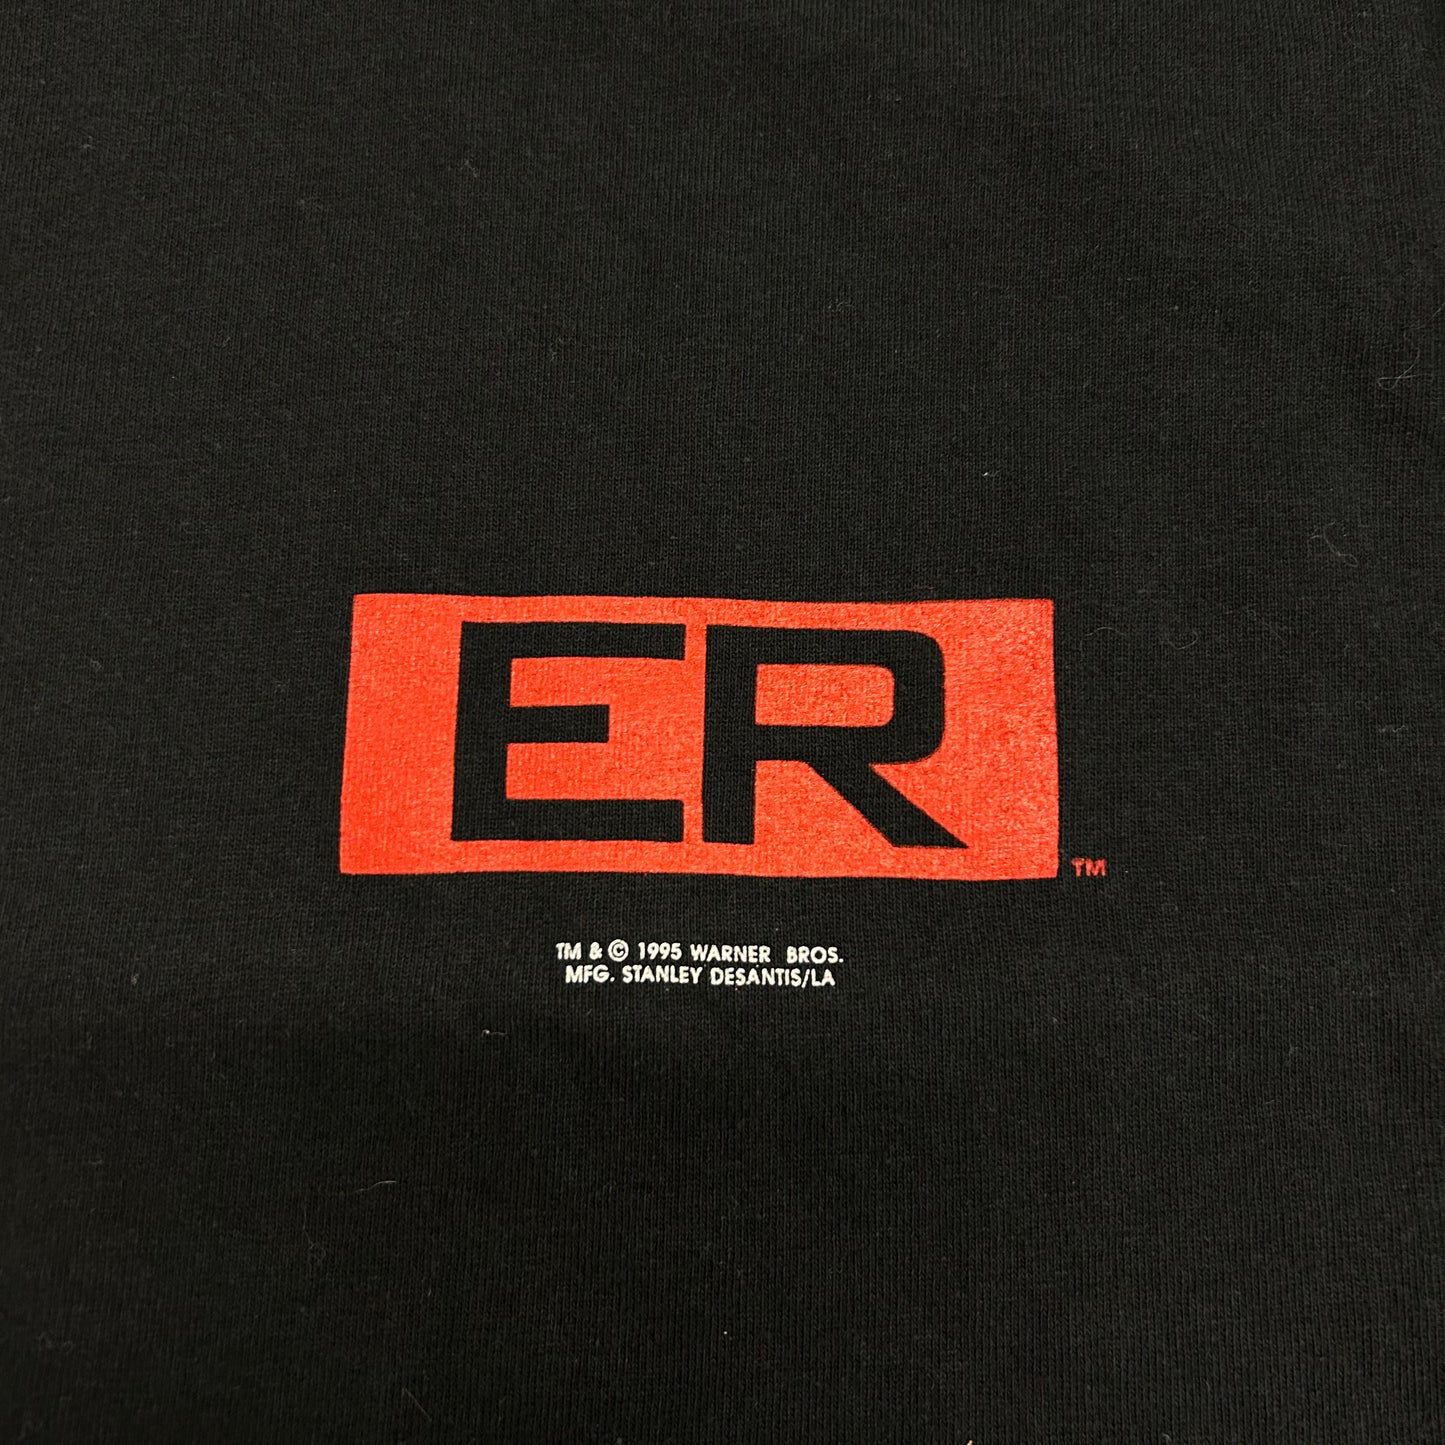 1995 ER "On Three" TV T-Shirt size L